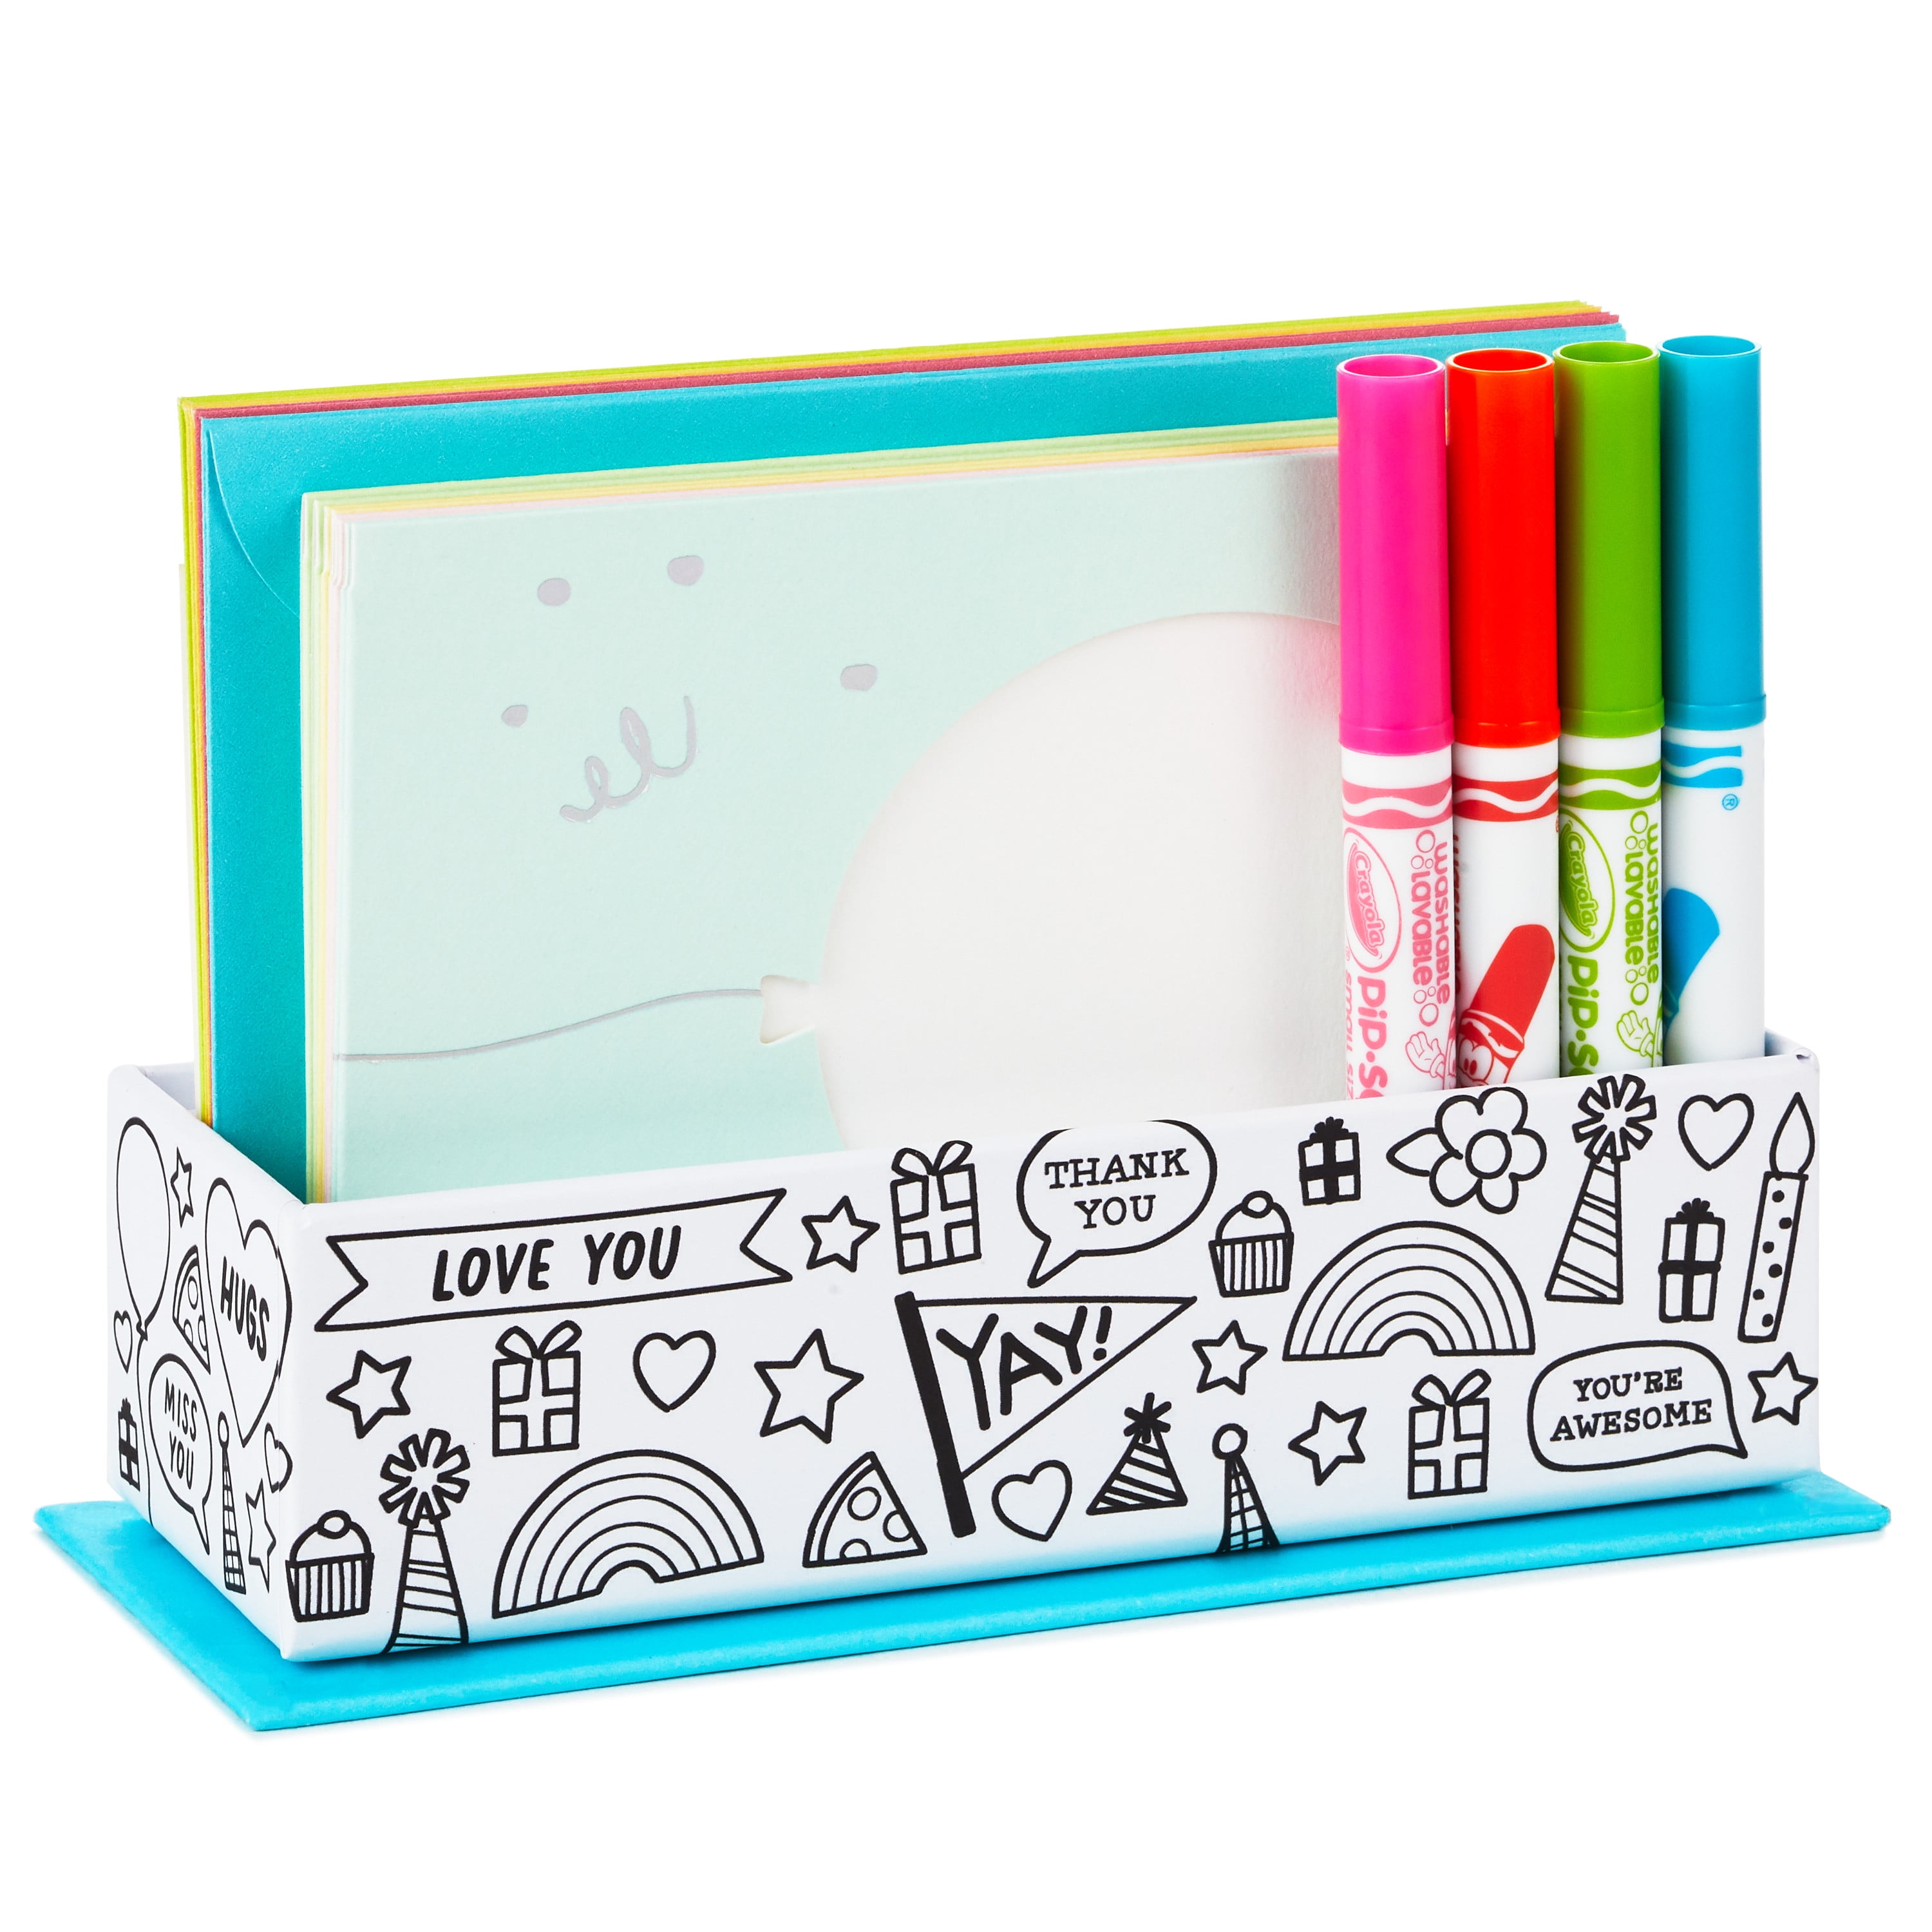 Crayola Paper Maker Kit